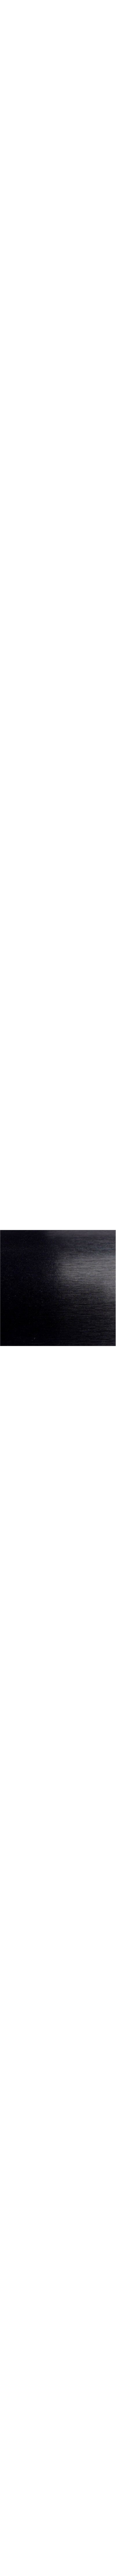 2080-BR212 Black metallic en 1.524m x 22.86ml